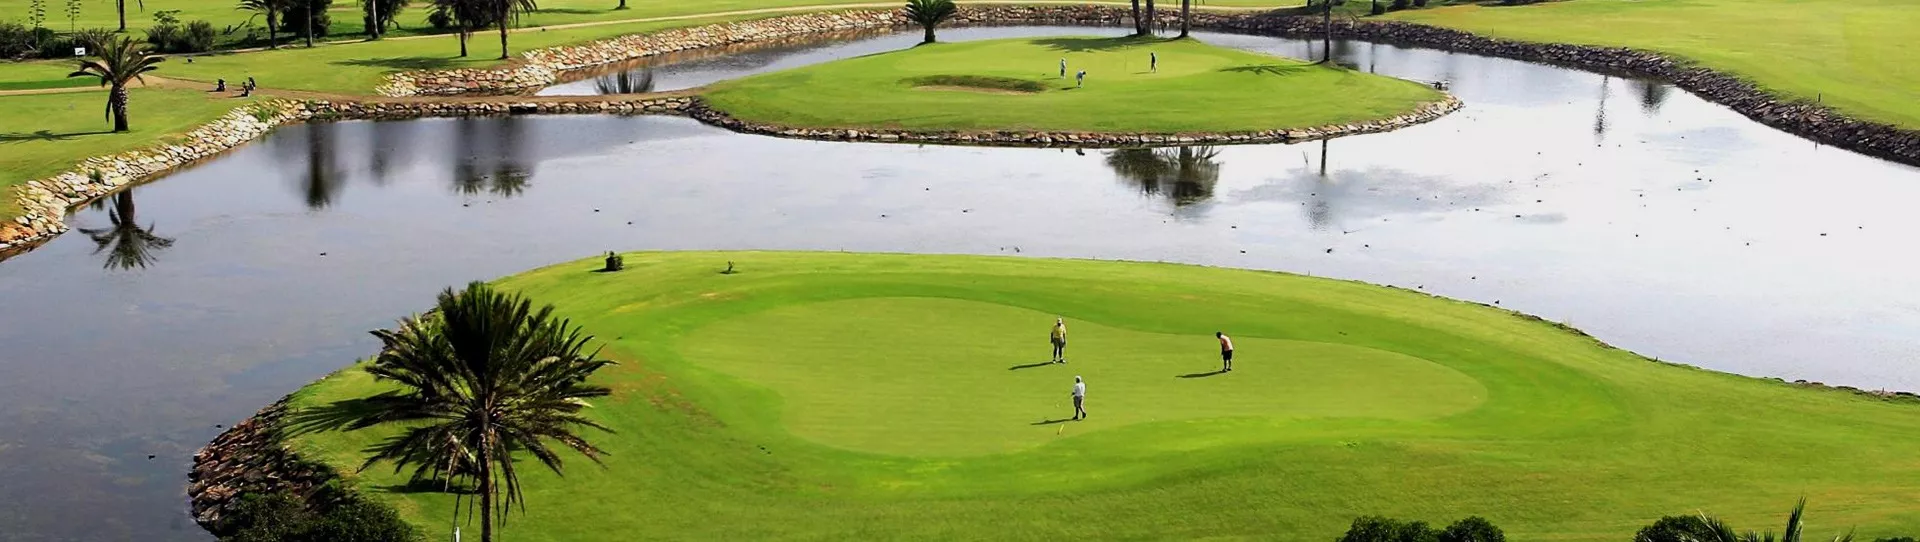 Spain golf courses - Almerimar Golf  - Photo 1